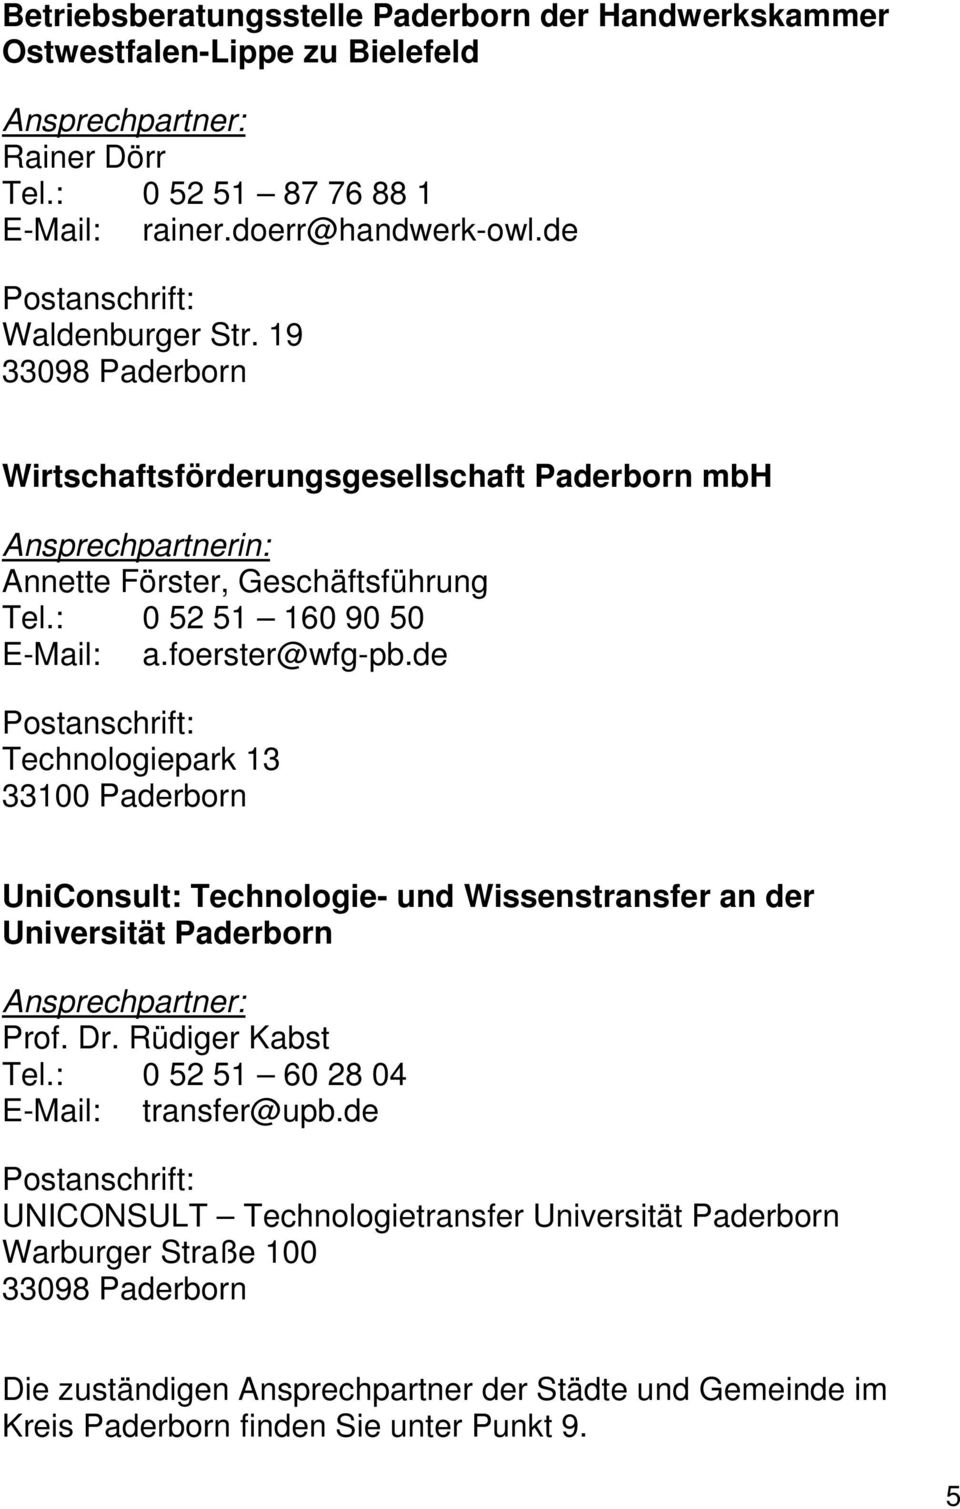 foerster@wfg-pb.de Technologiepark 13 33100 Paderborn UniConsult: Technologie- und Wissenstransfer an der Universität Paderborn Ansprechpartner: Prof. Dr. Rüdiger Kabst Tel.